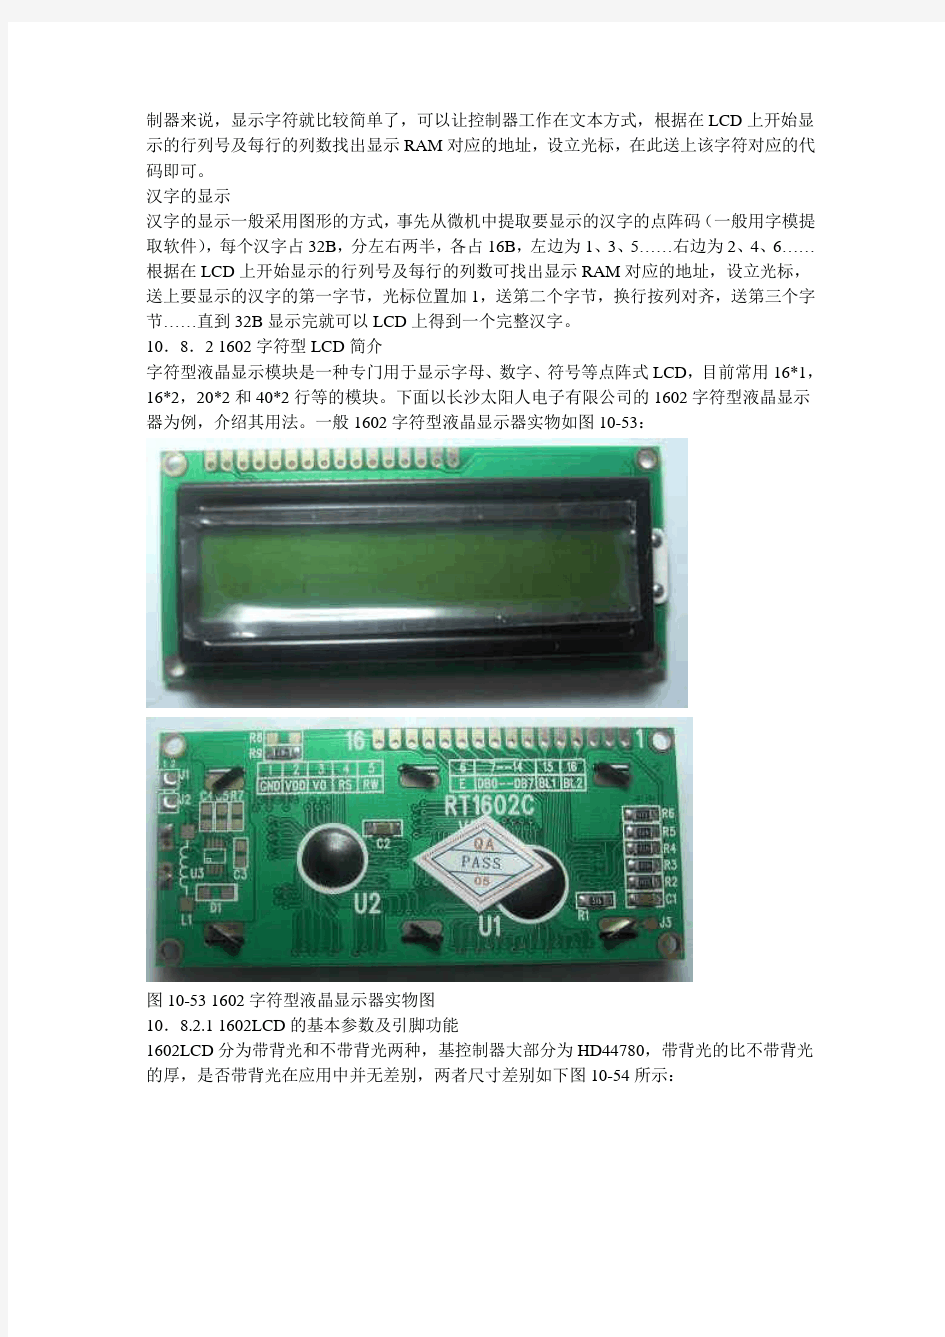 LCD1602 LM016l程序和使用说明